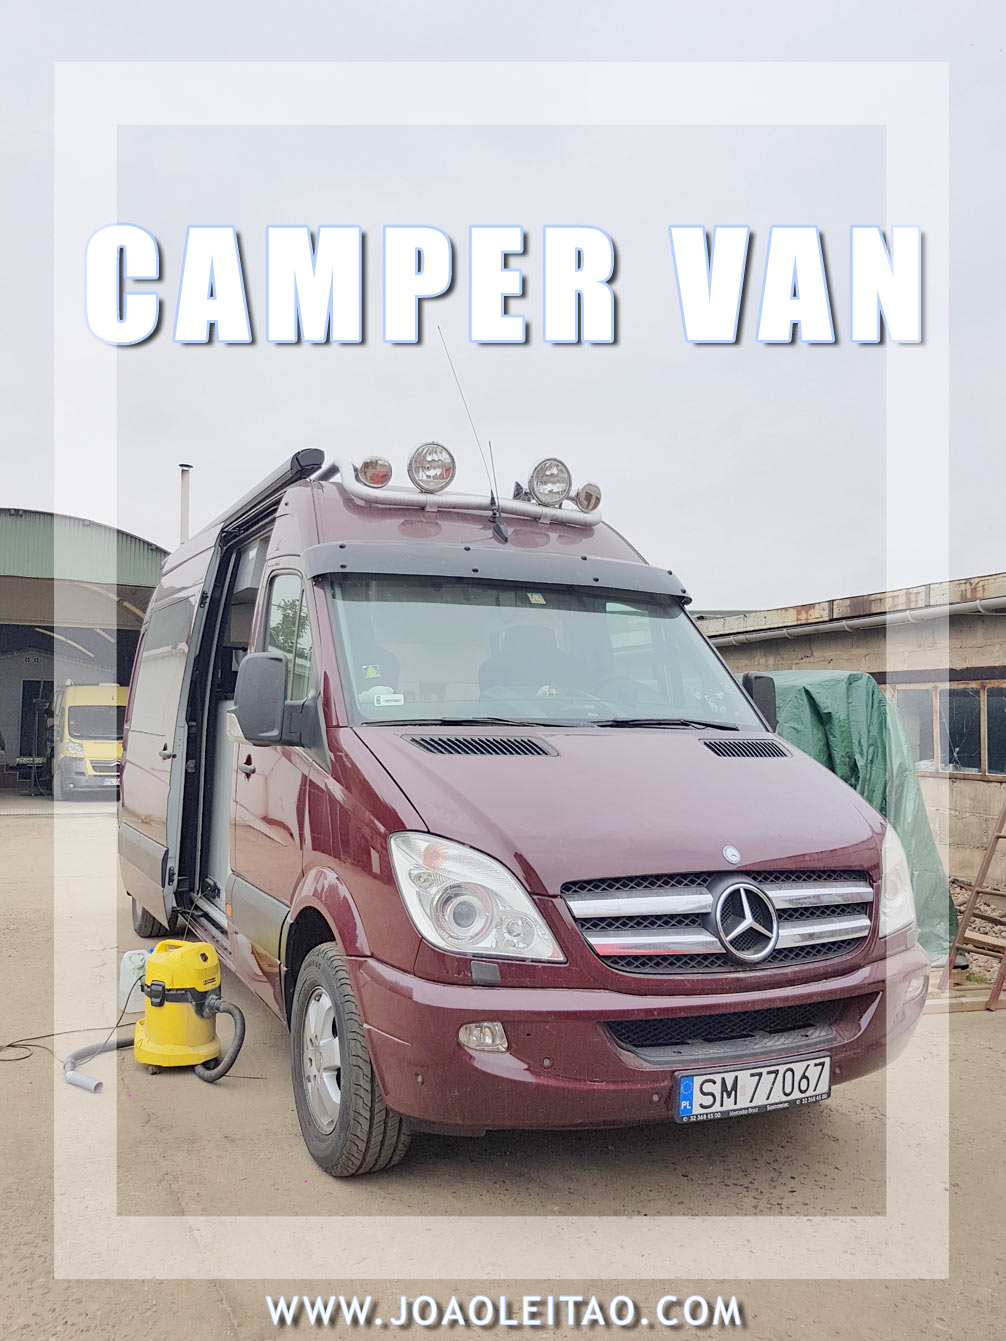 awd camper van for sale